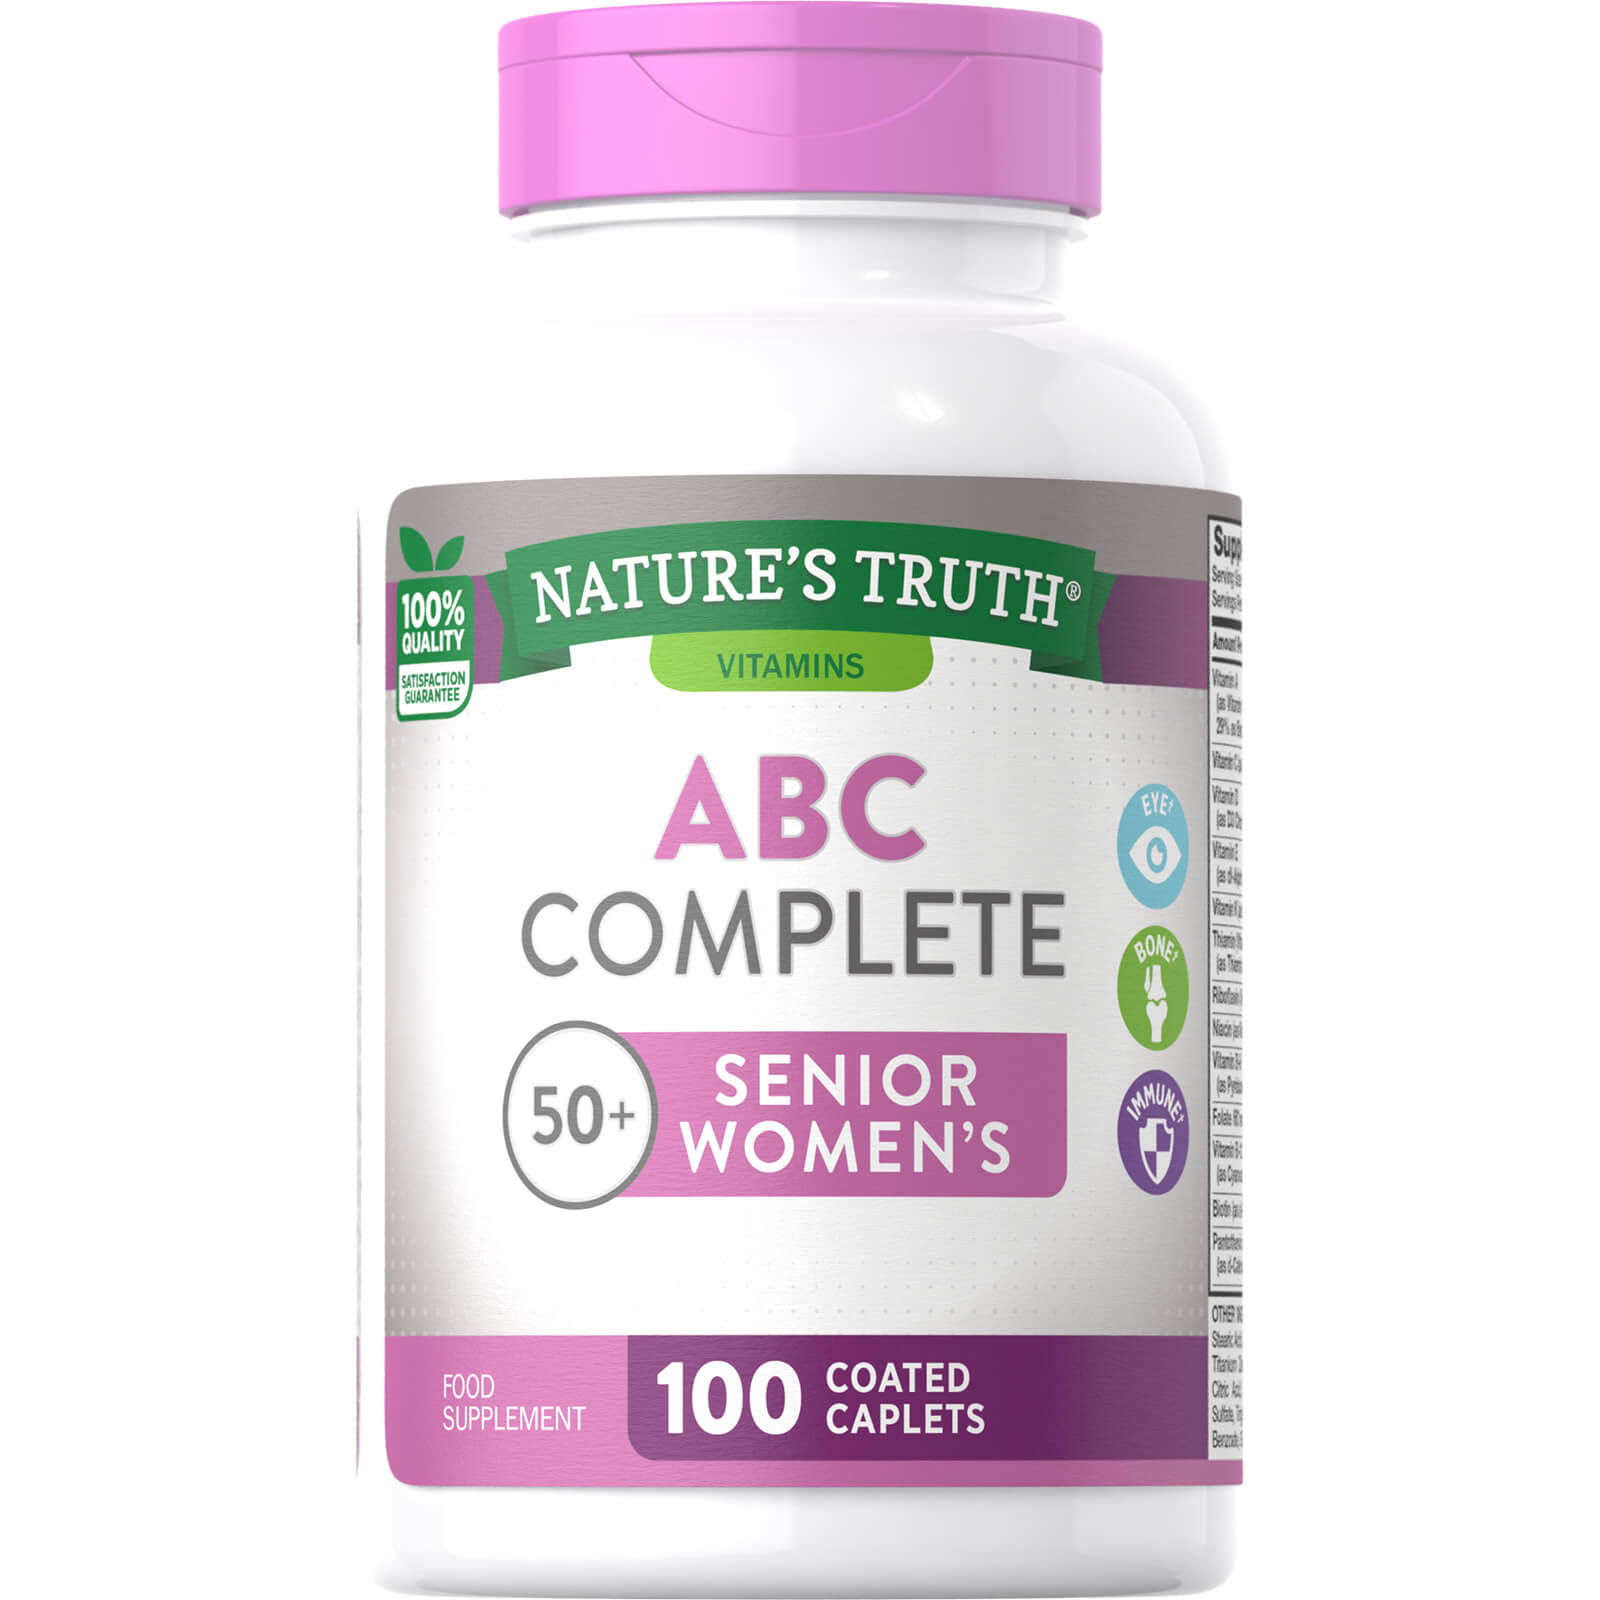 Nature's Truth Abc Complete Senior Women's 50+ Multivitamin - 100 Caplets